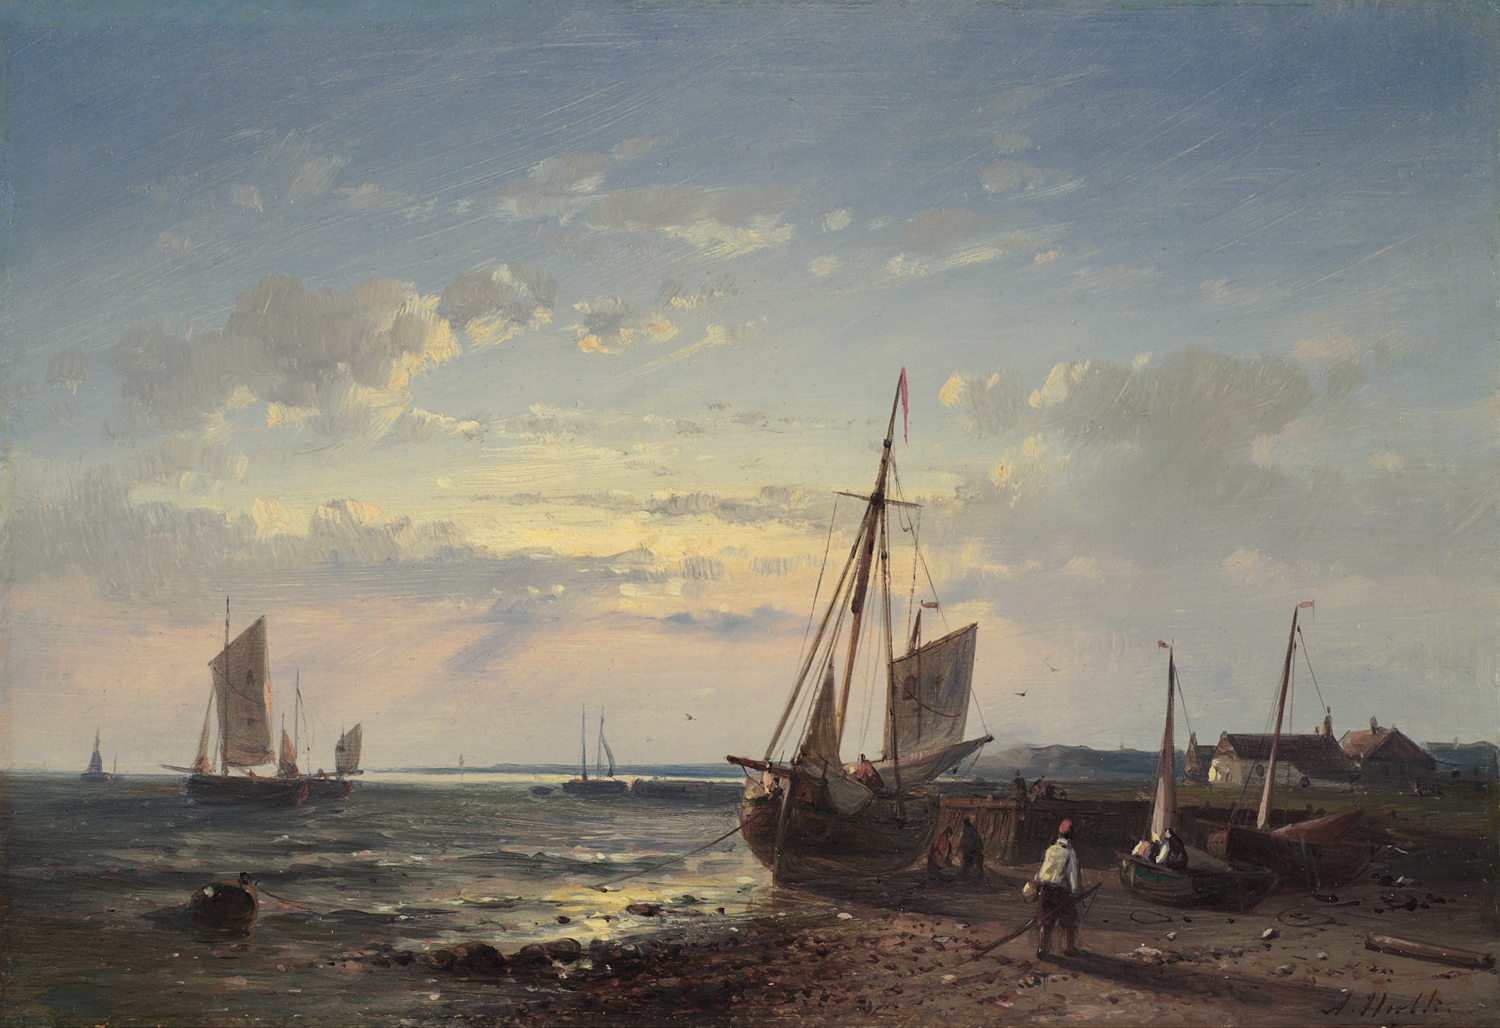 Abraham Hulk (Dutch 1813-1897) 'Shipping at Sunset'